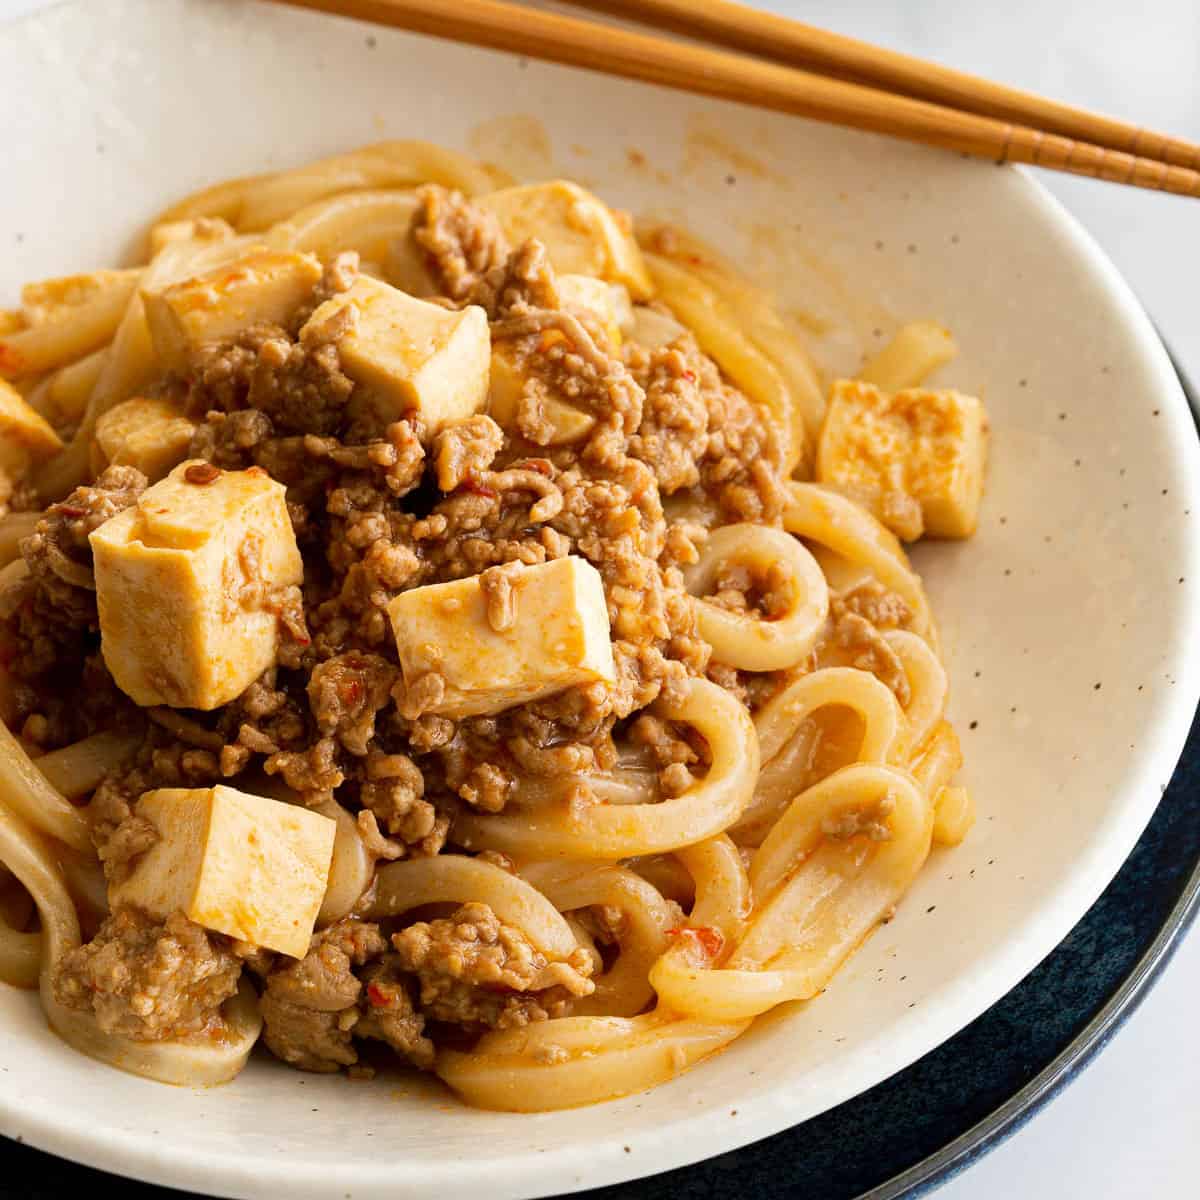 A close up image of Japanese mapo tofu udon noodles.